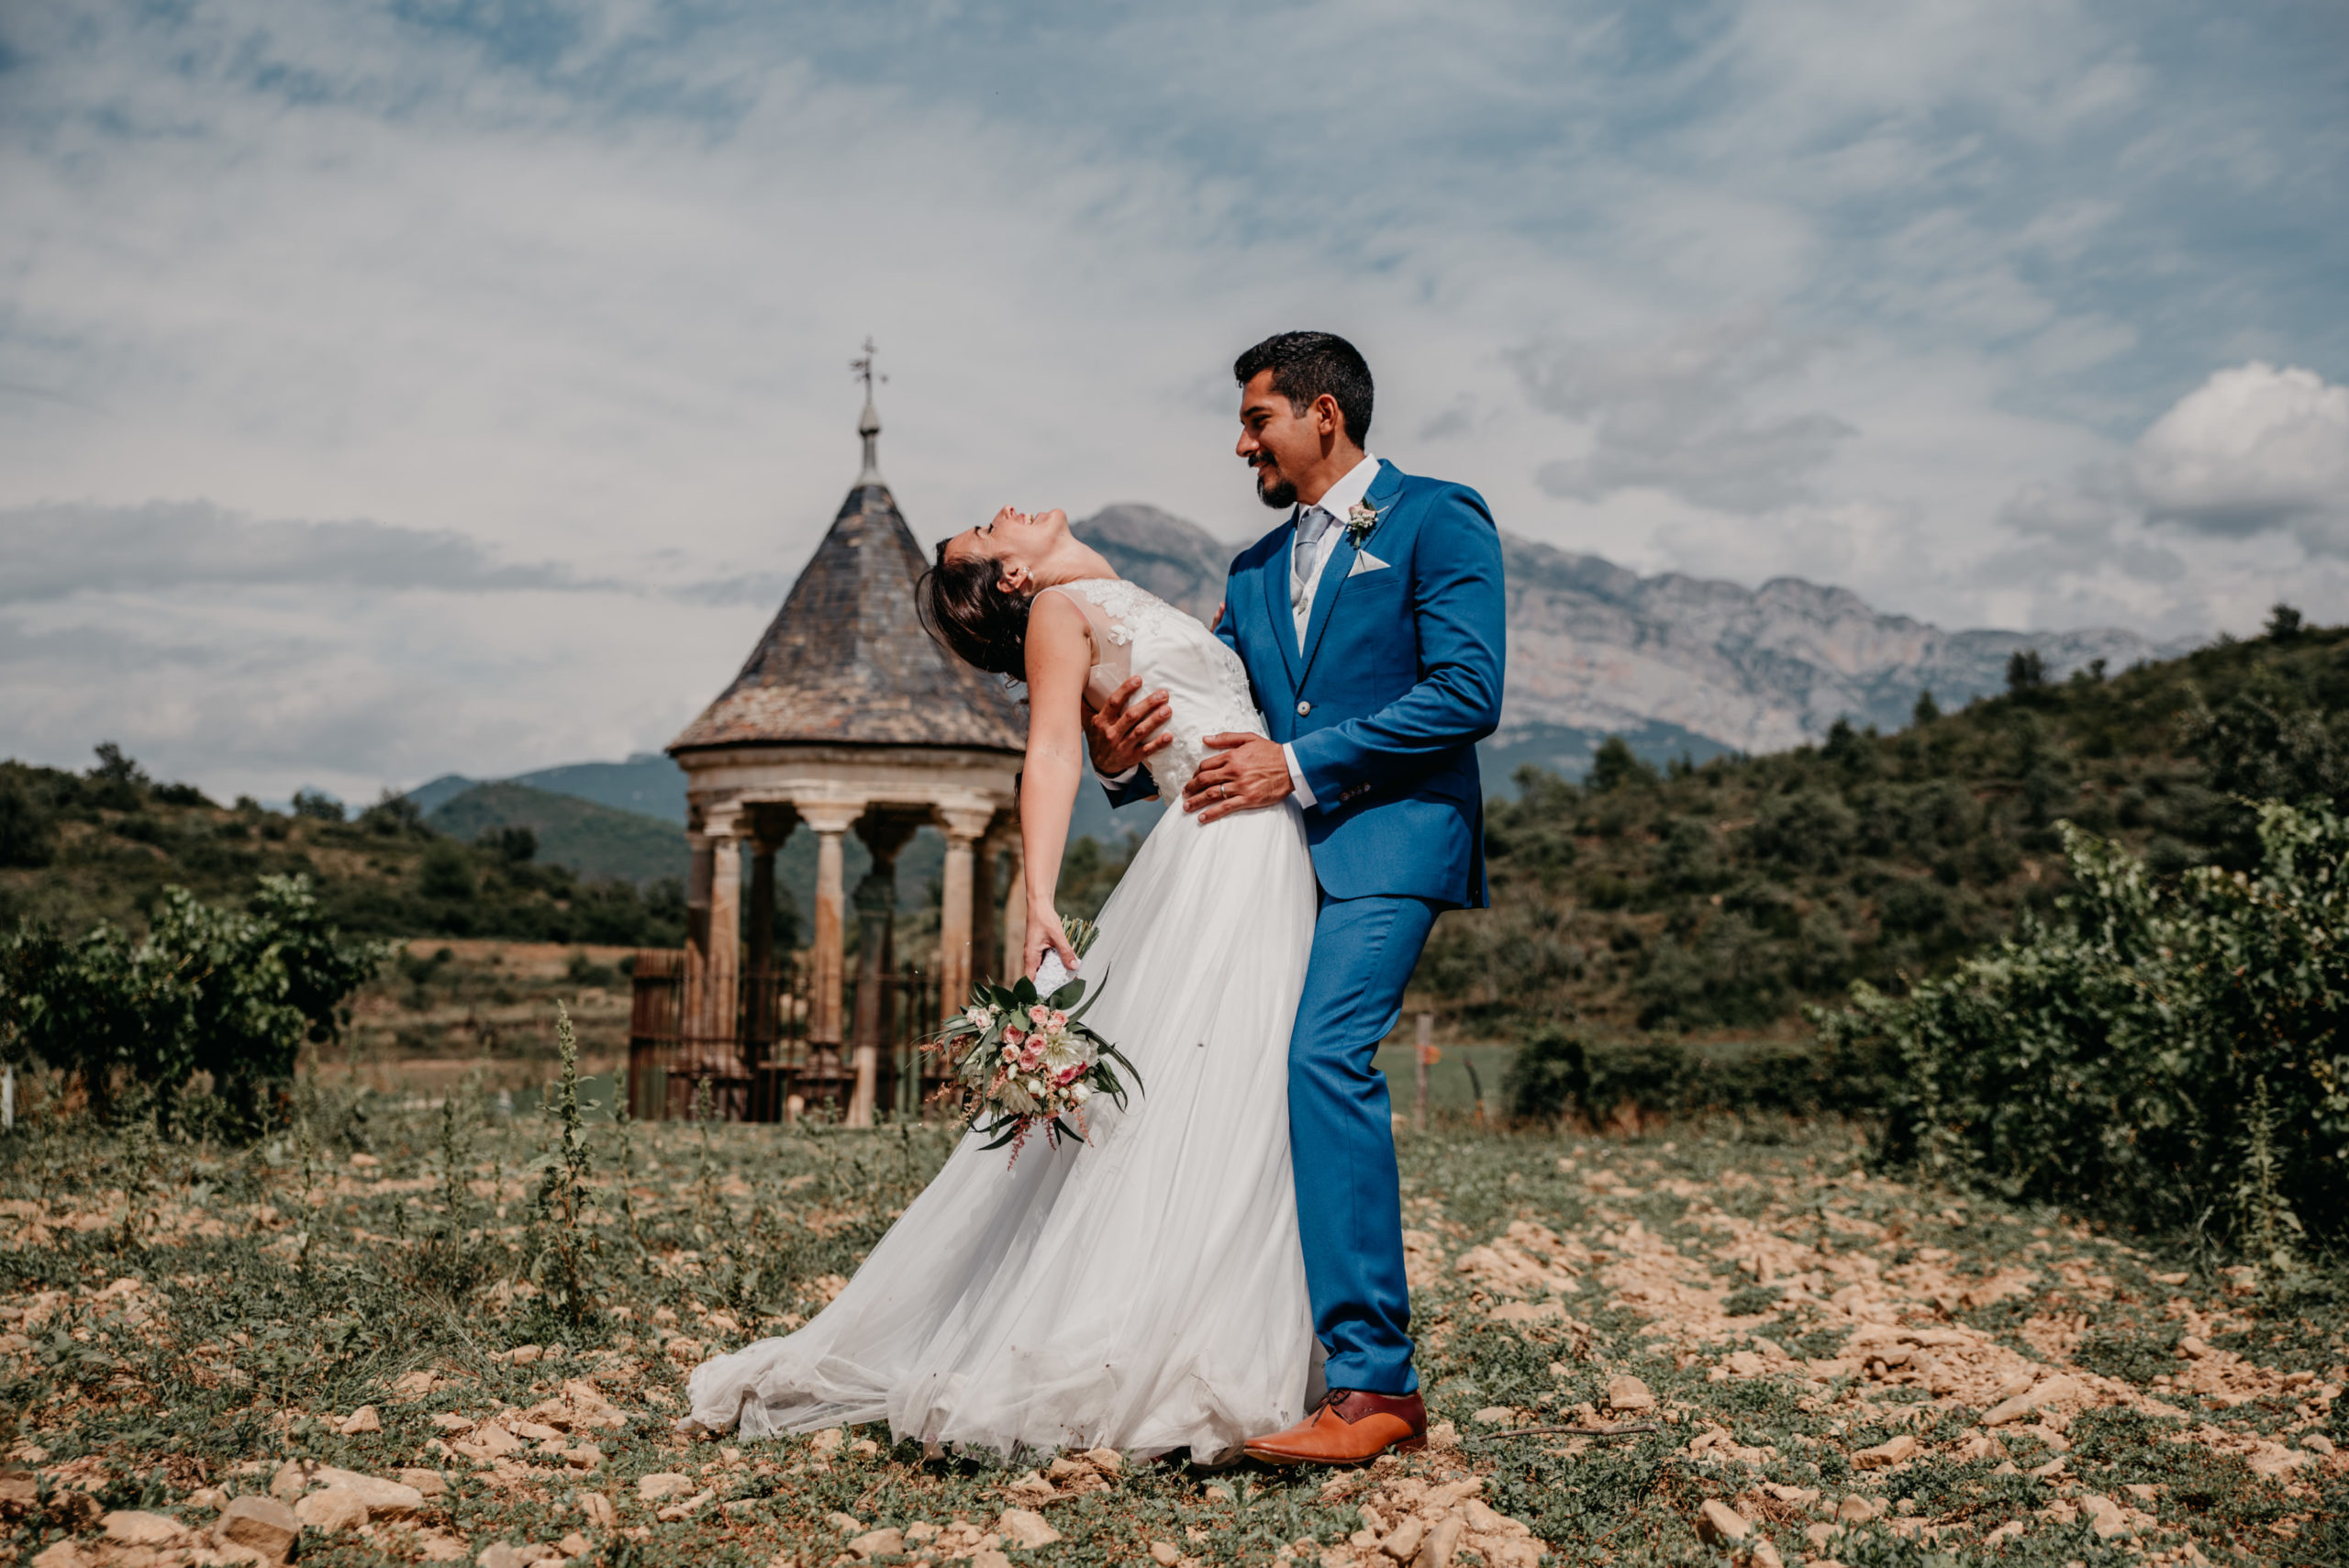 boda-ainsa-huesca-pirineo-fotografía-reportaje-bodas-muerdelaespina